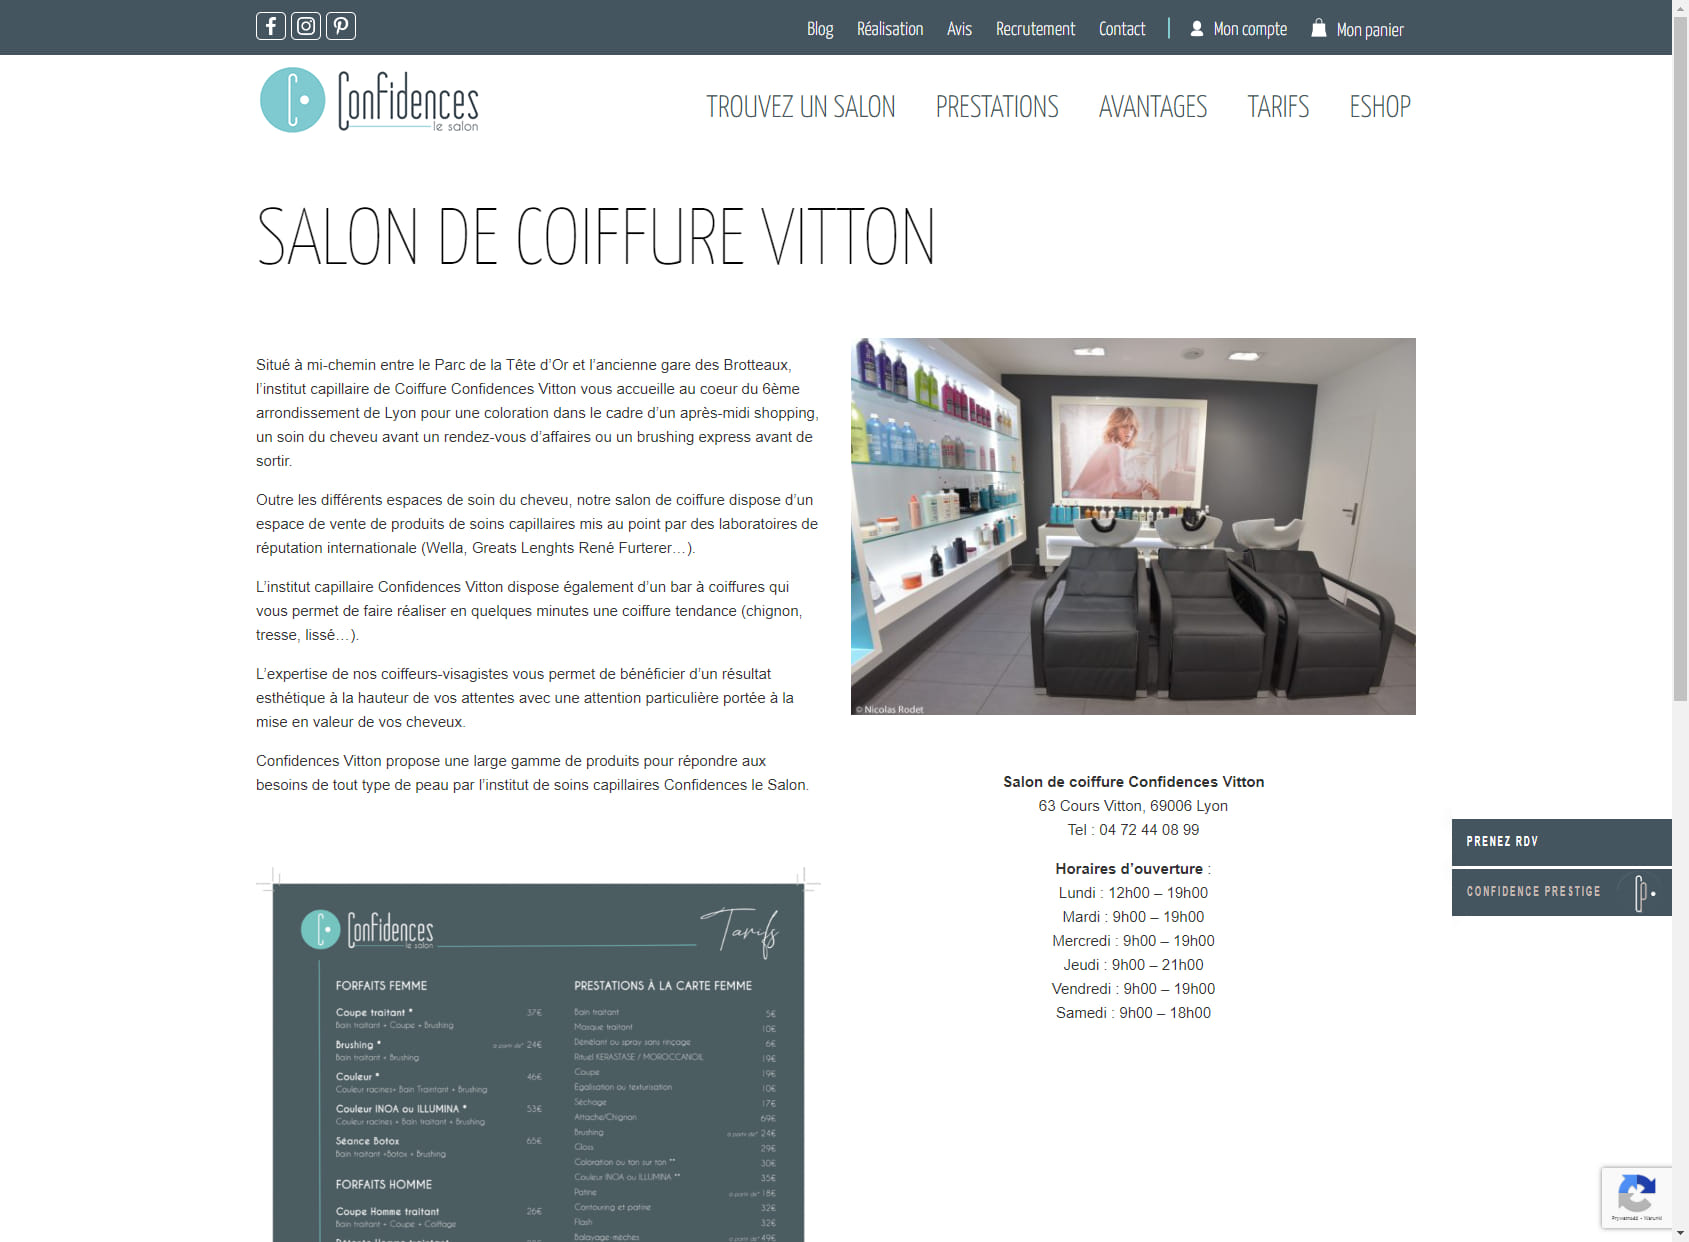 Confidences Le Salon - Vitton - Lyon 6 - Coiffure